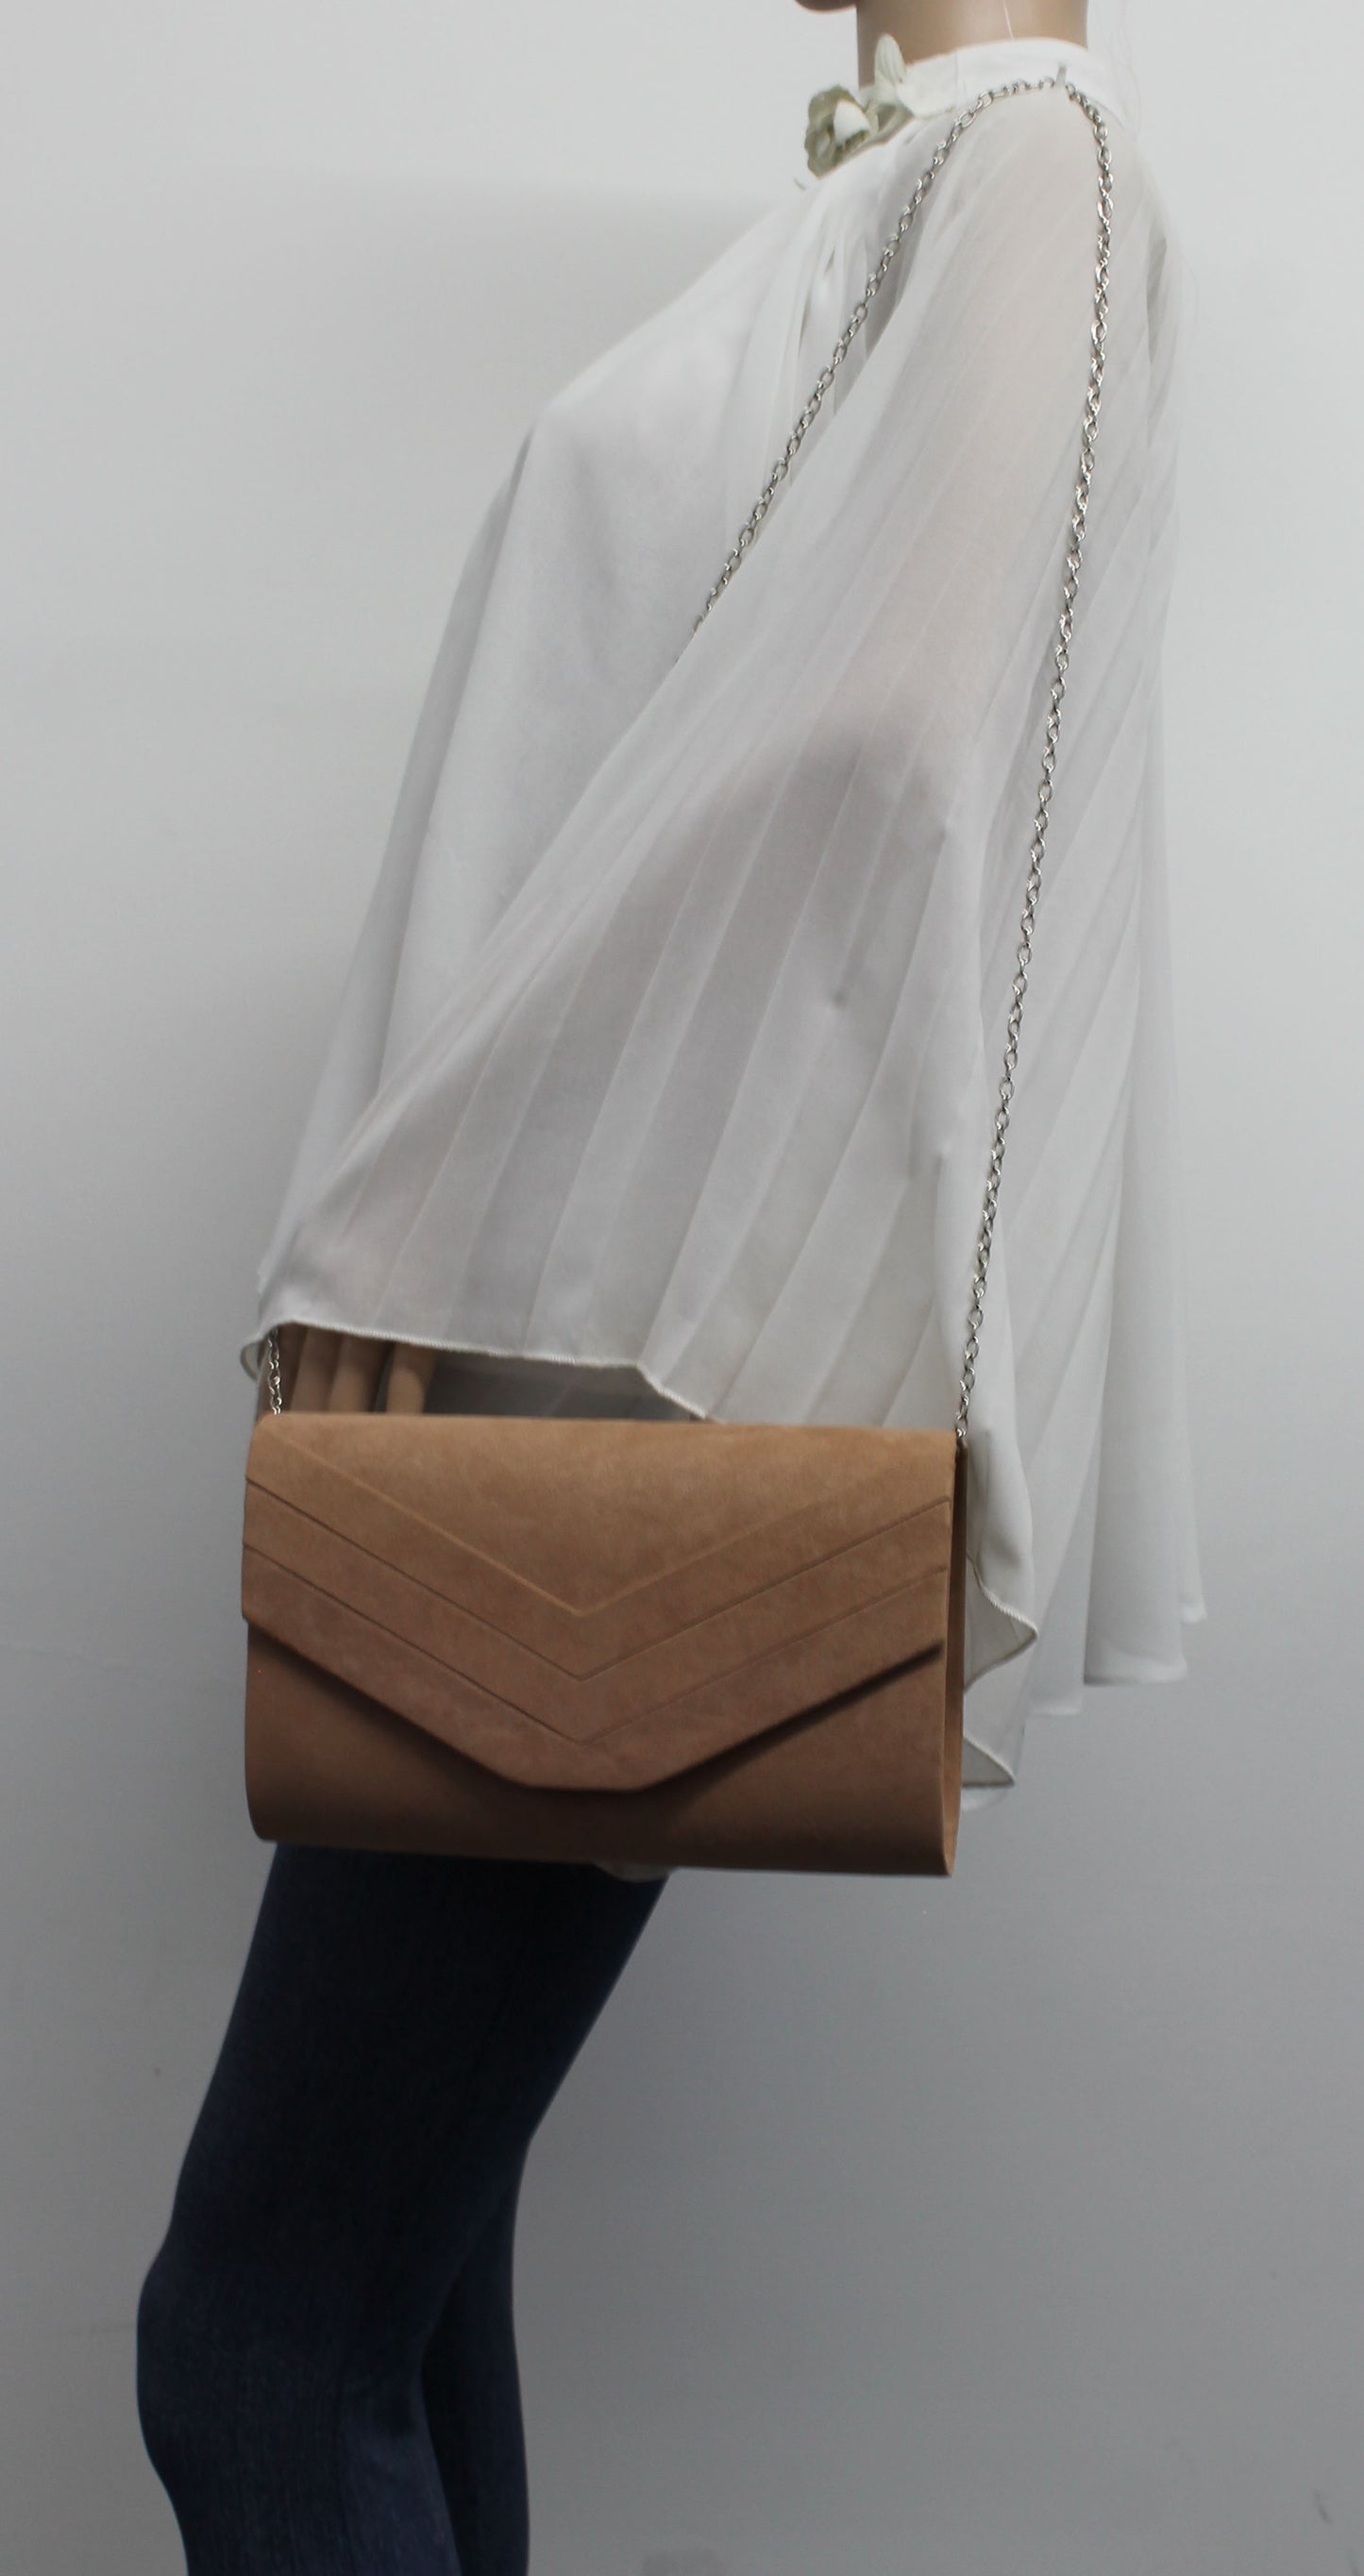 SWANKYSWANS Samantha V Detail Clutch Bag Tan Cute Cheap Clutch Bag For Weddings School and Work